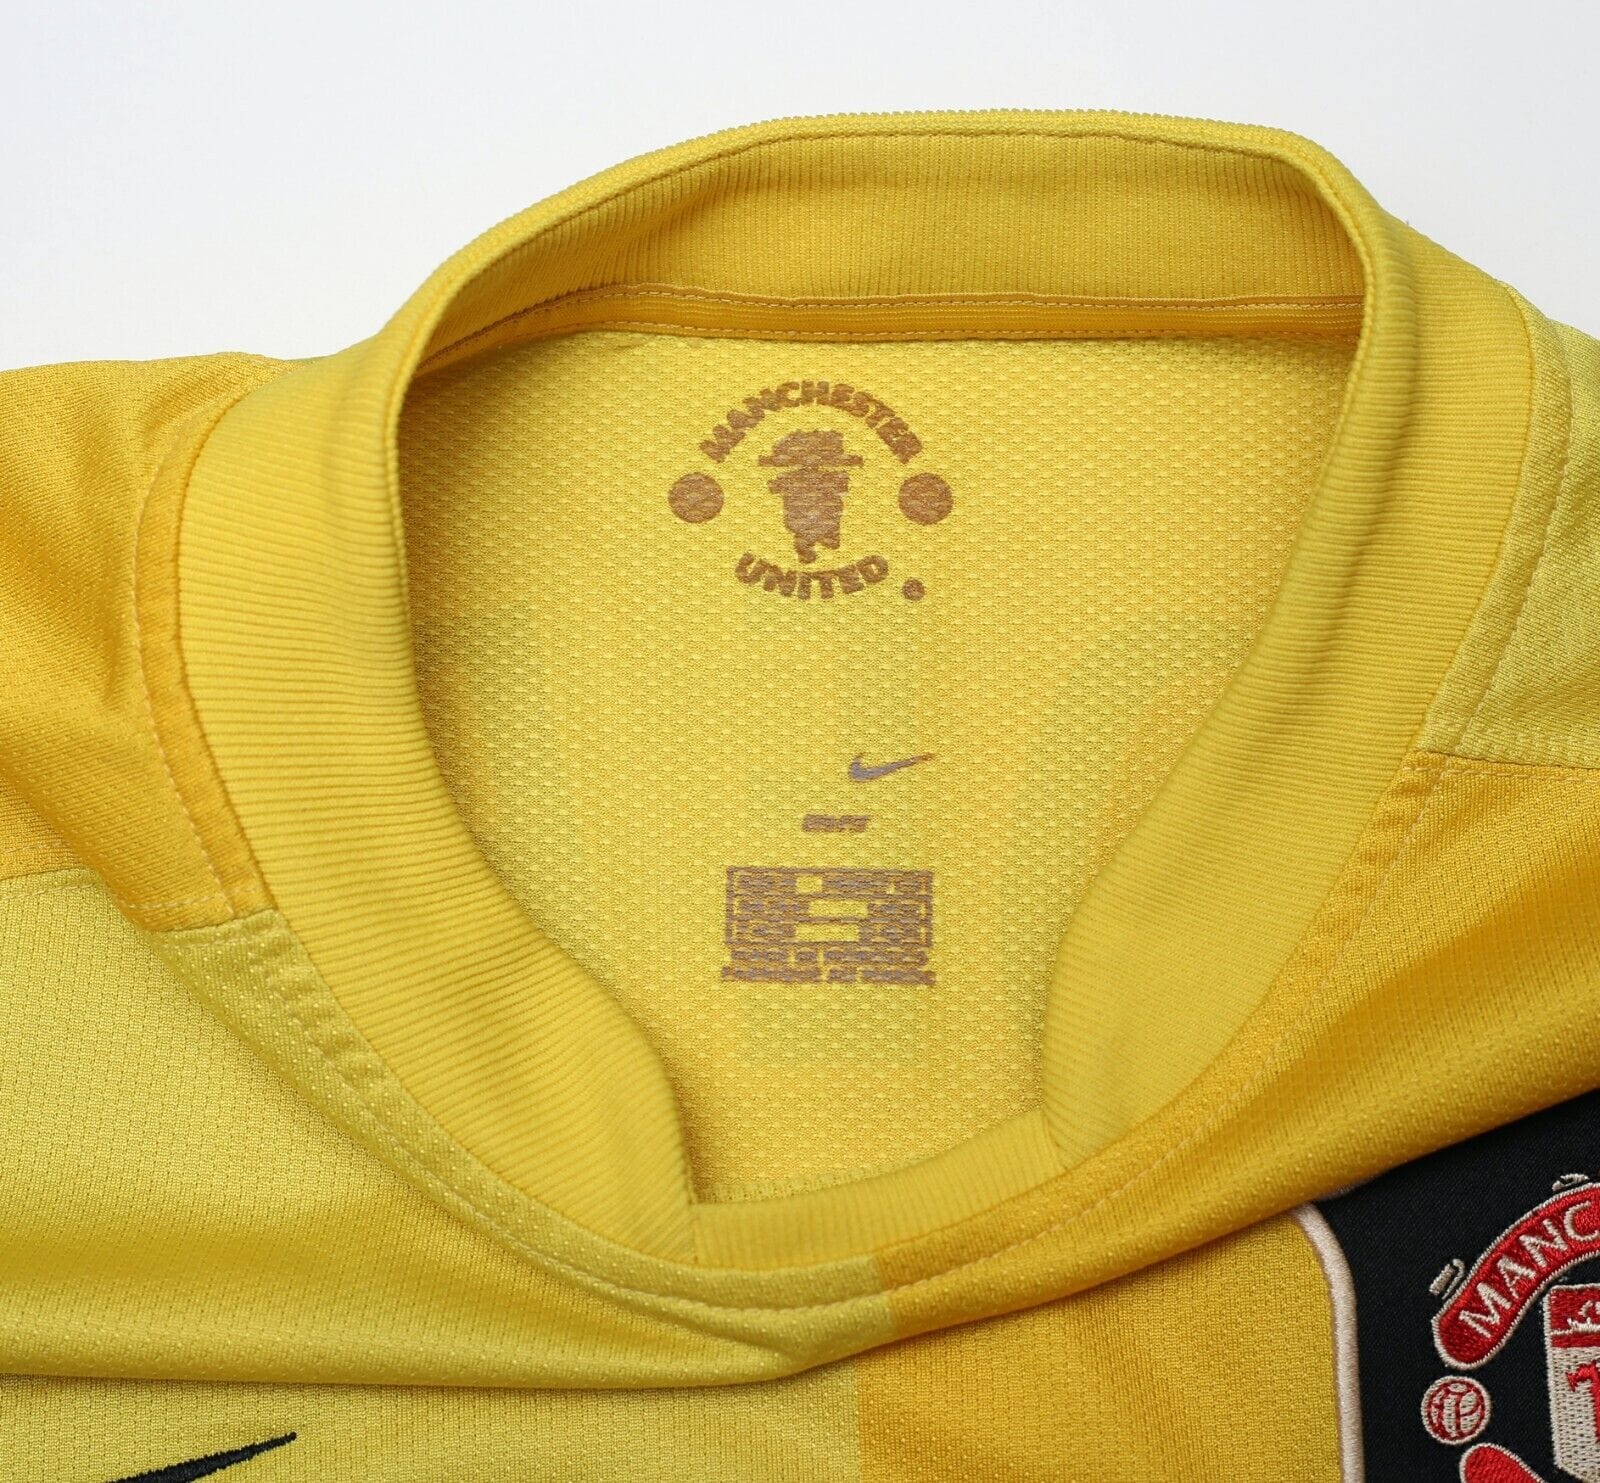 2006/07 VAN DER SAR #1 Manchester United Vintage Nike GK Football Shirt (M)